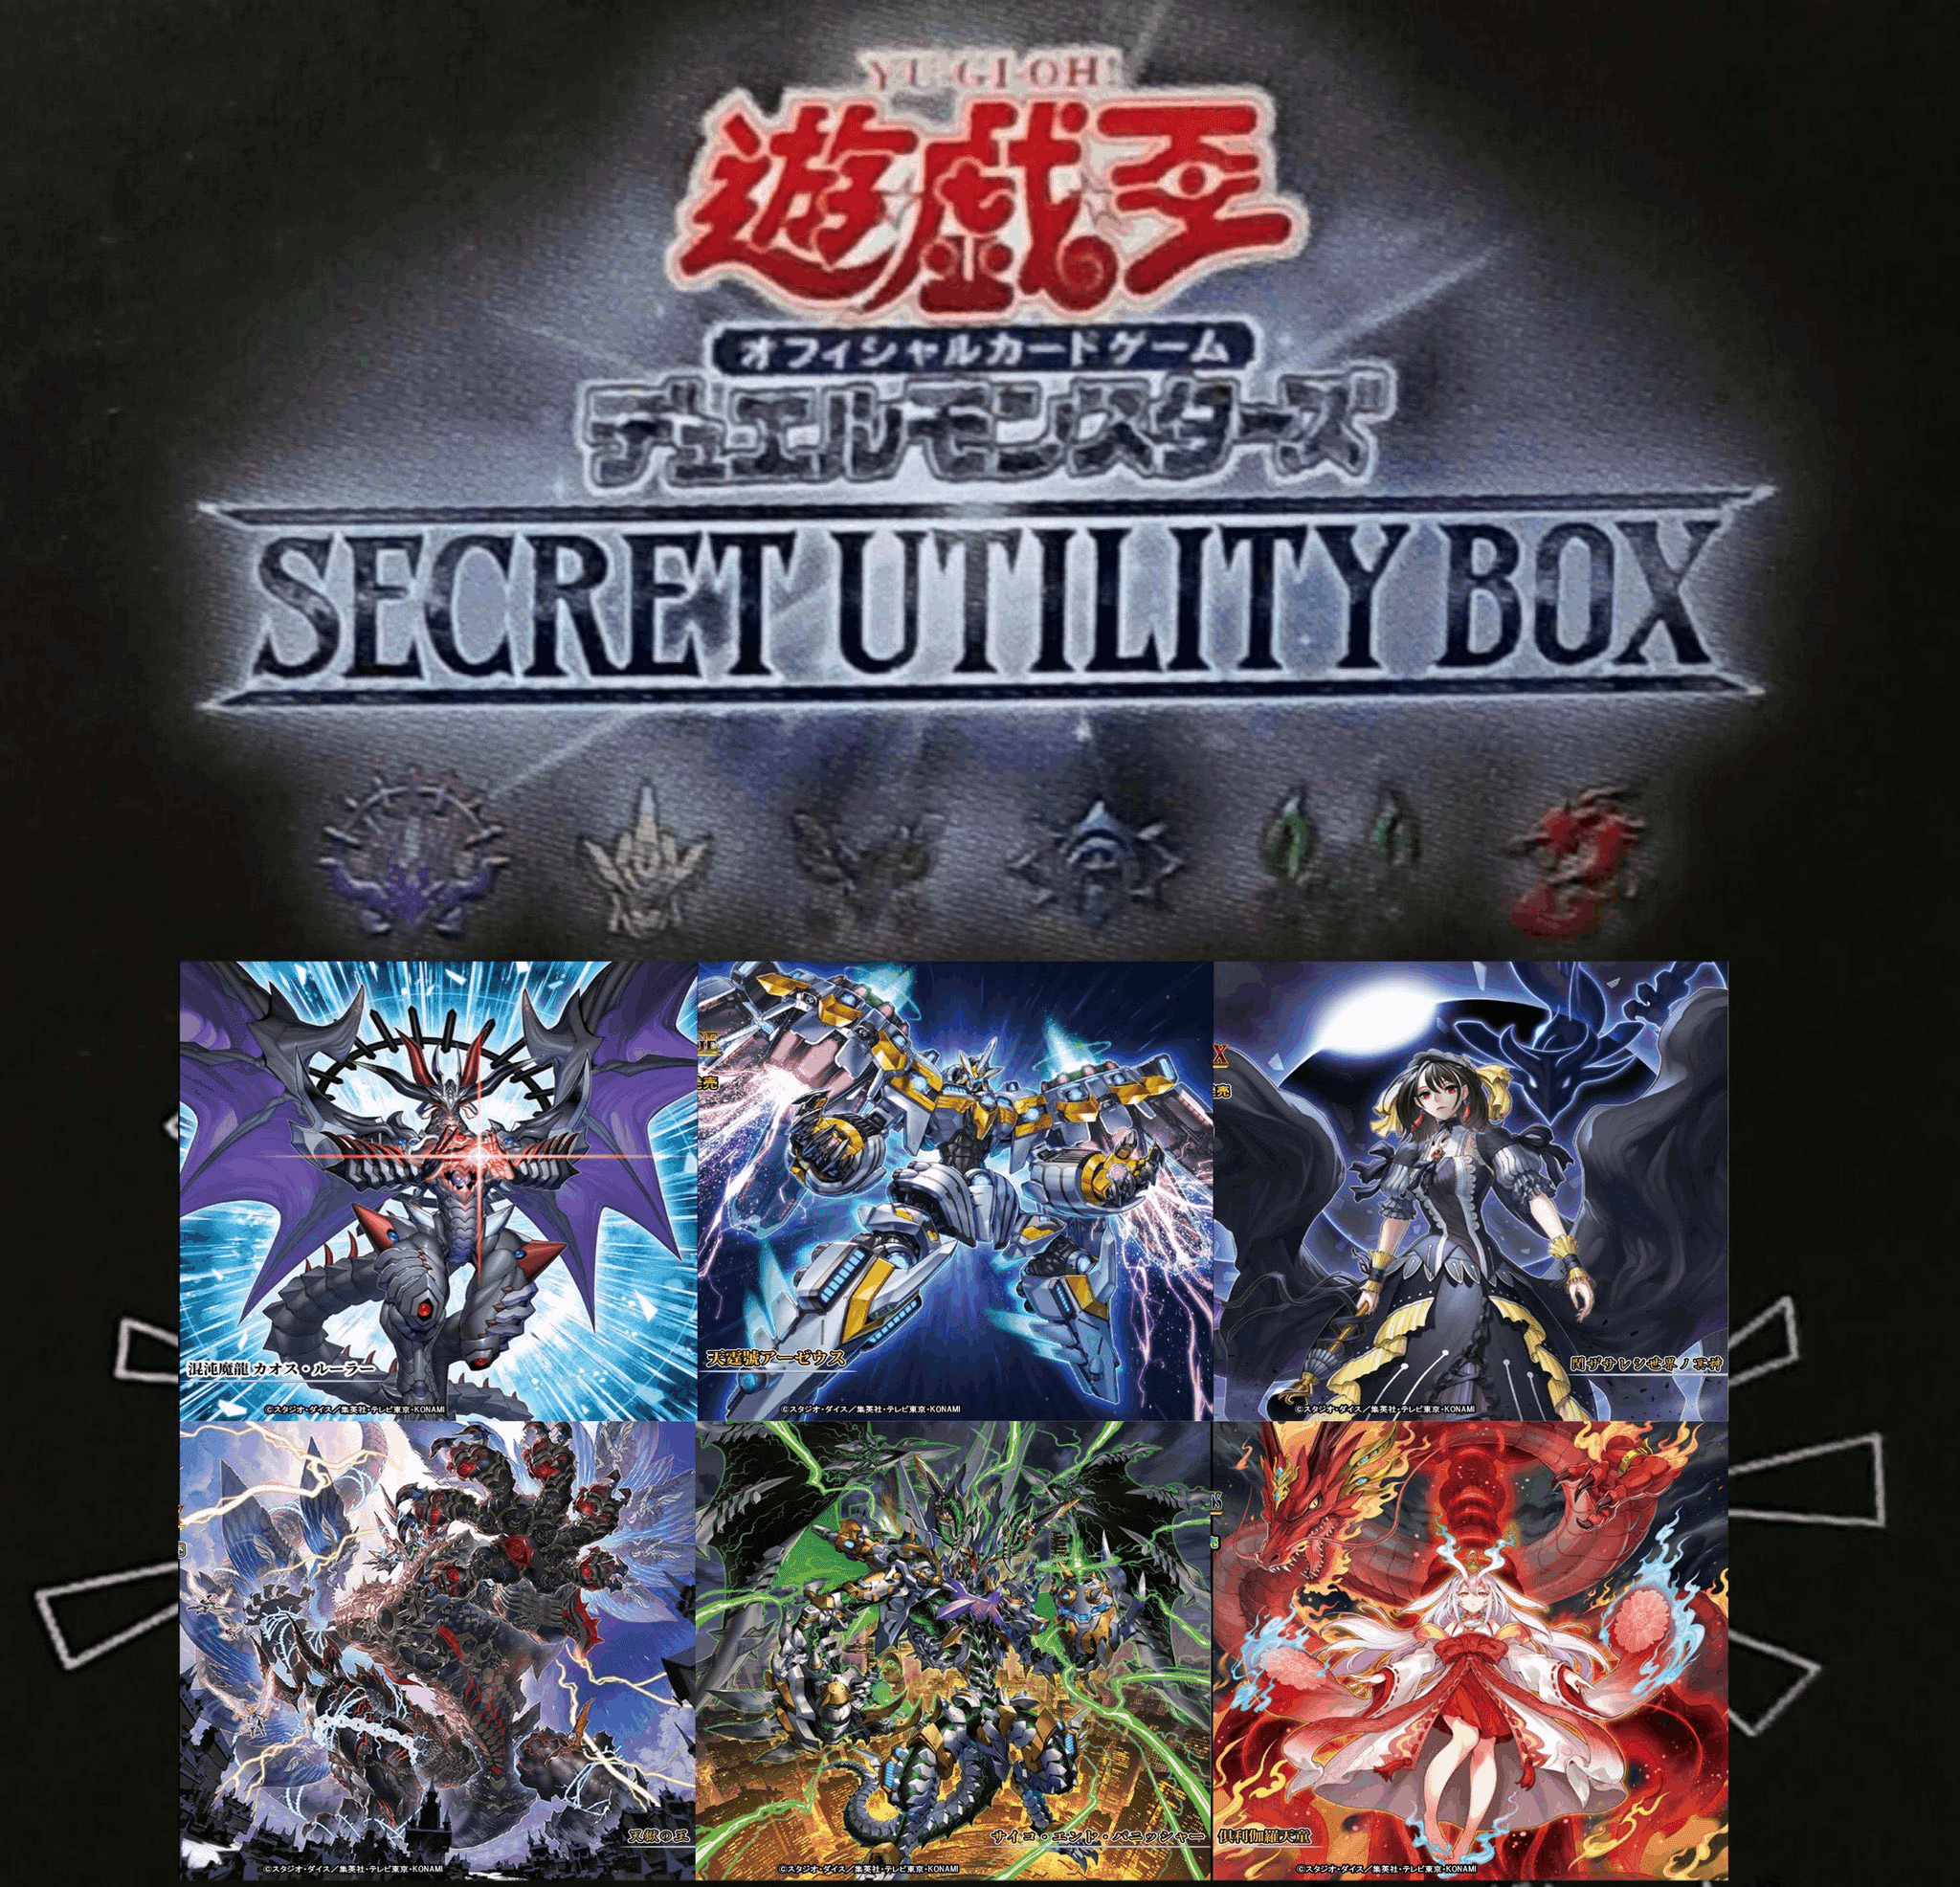 新品未開封 遊戯王 SECRET UTILITY BOX 2BOXセット